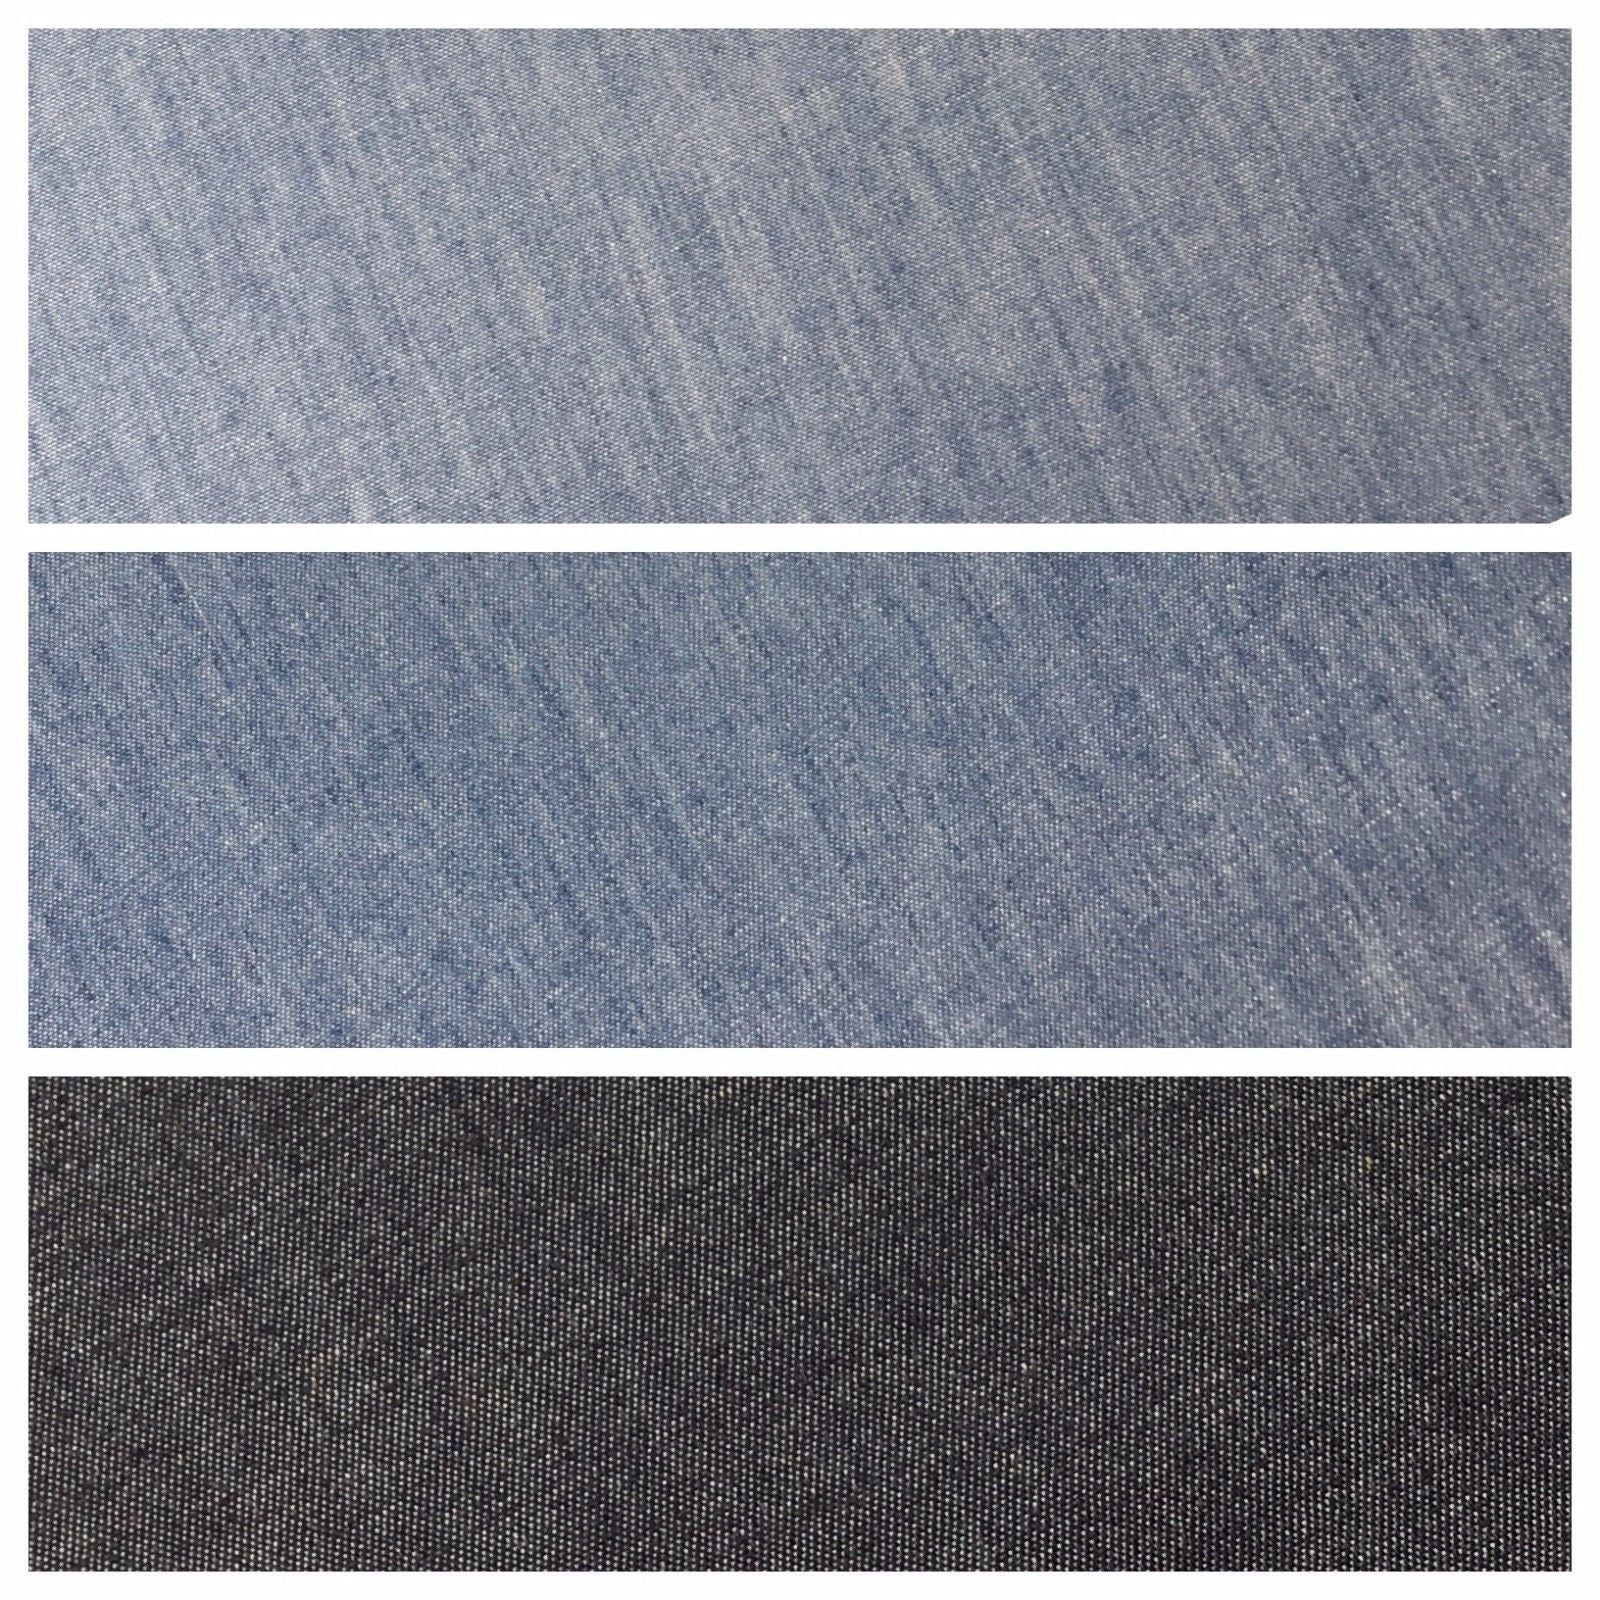 4oz Washed Denim Light-medium-dark blue 100% Cotton Fabric 146cm wide  M615 Mtex - Midland Textiles & Fabric